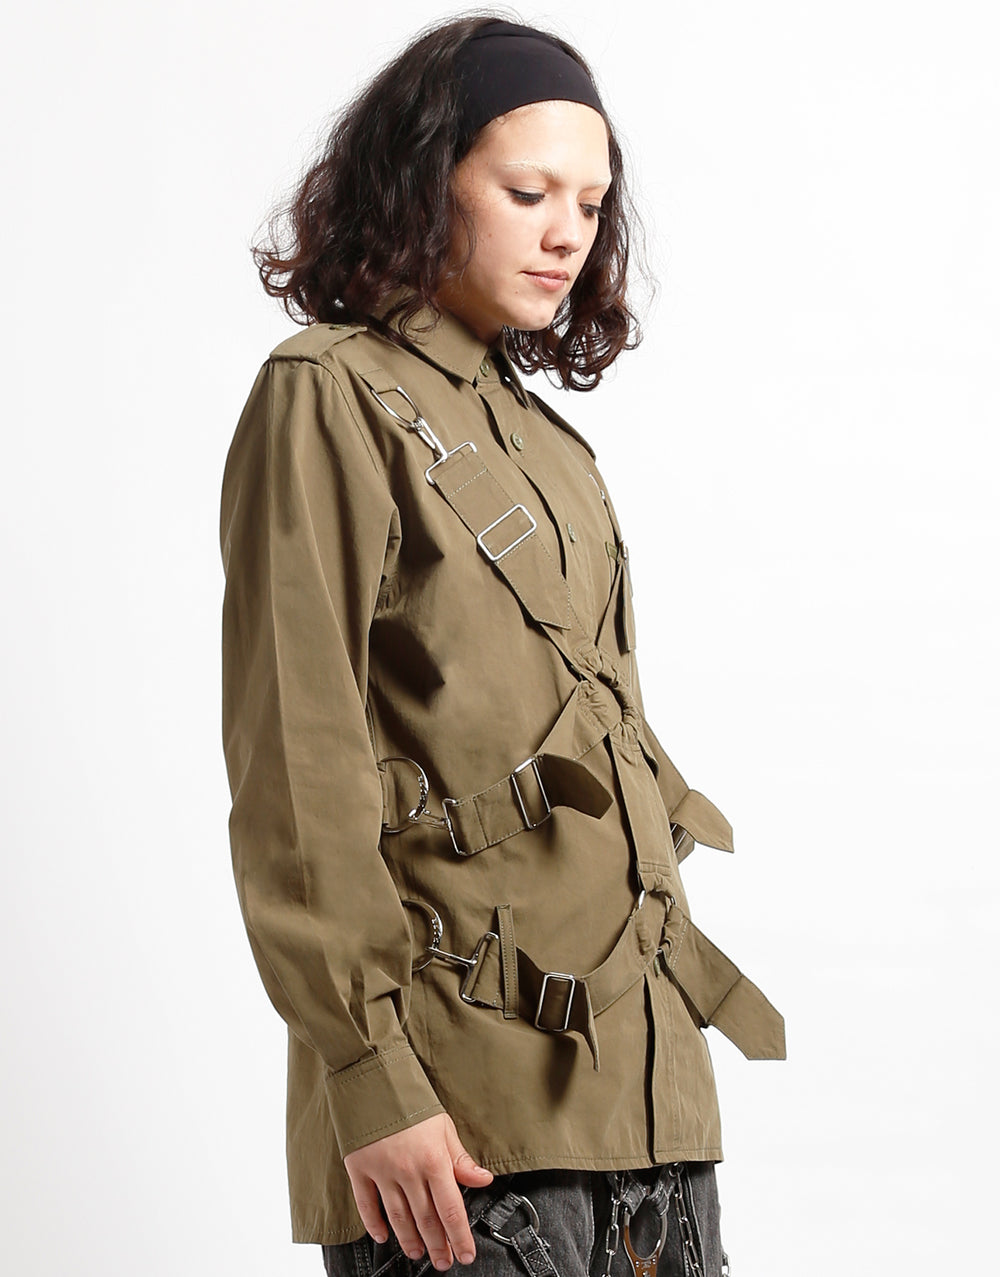 Coat, Jumper, Parachute, QM – WWII Impressions, Inc.